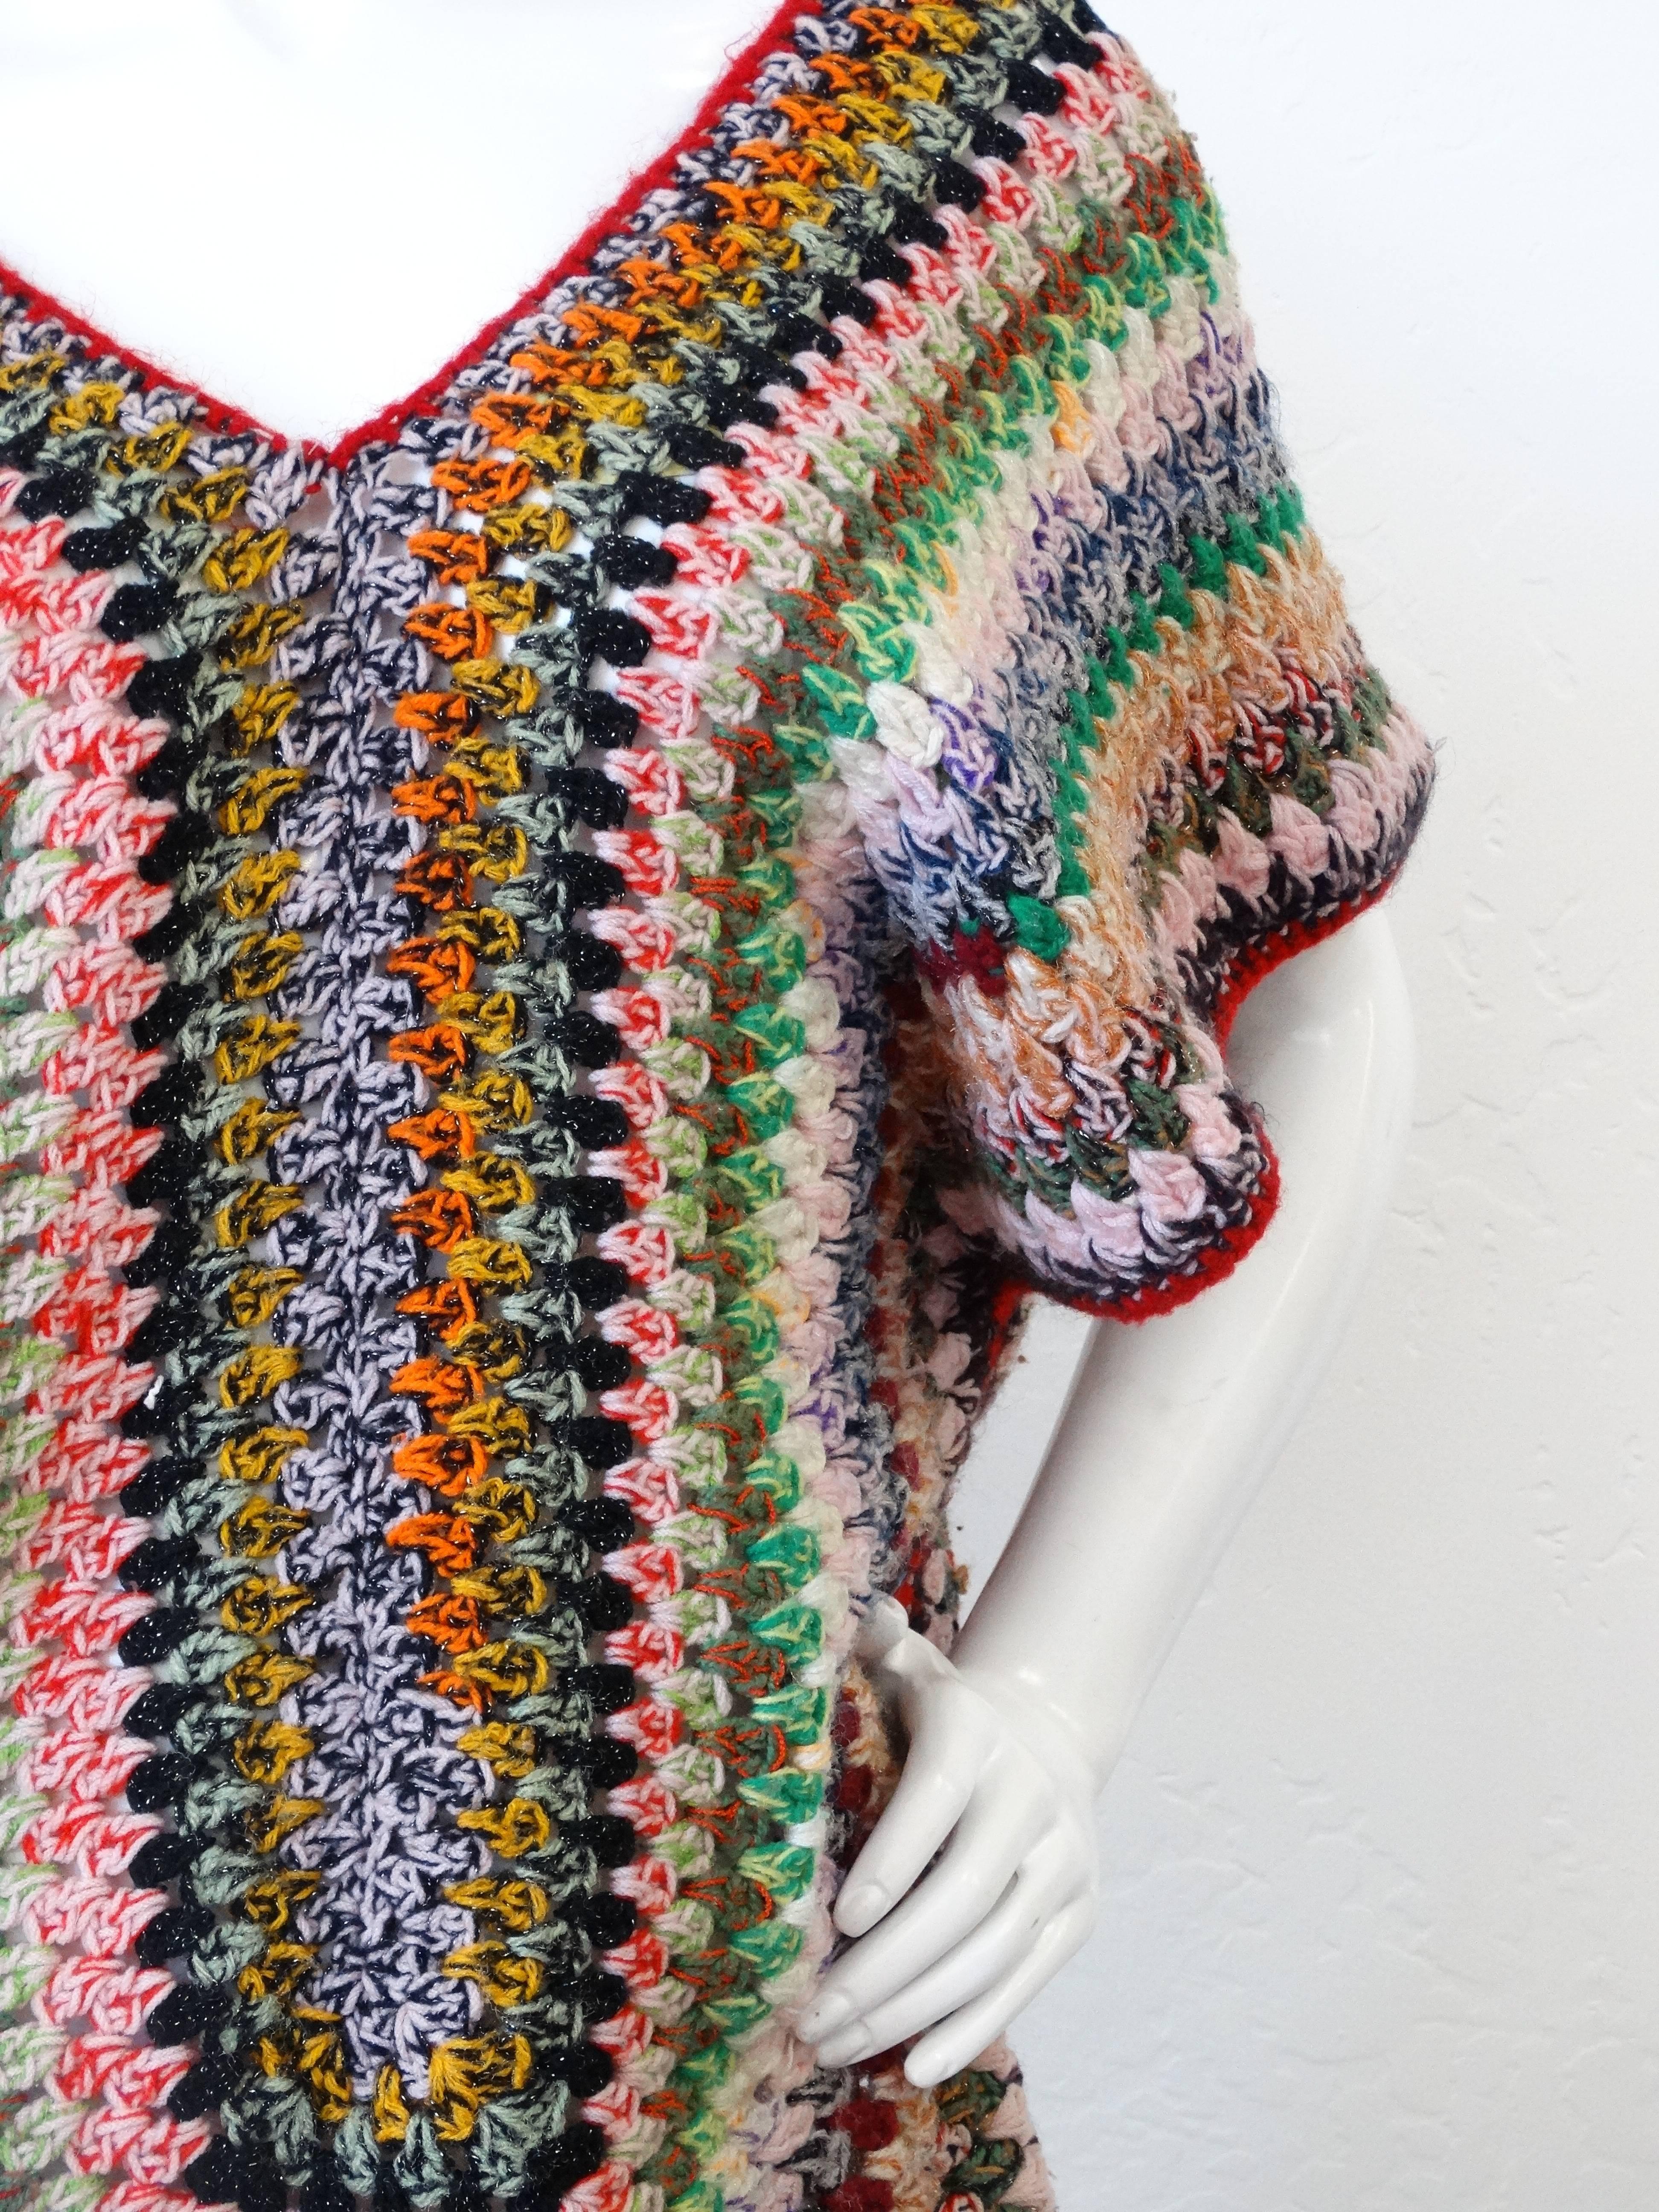 Women's Chic 1970s Bohemian Multicolored Knit Poncho Top